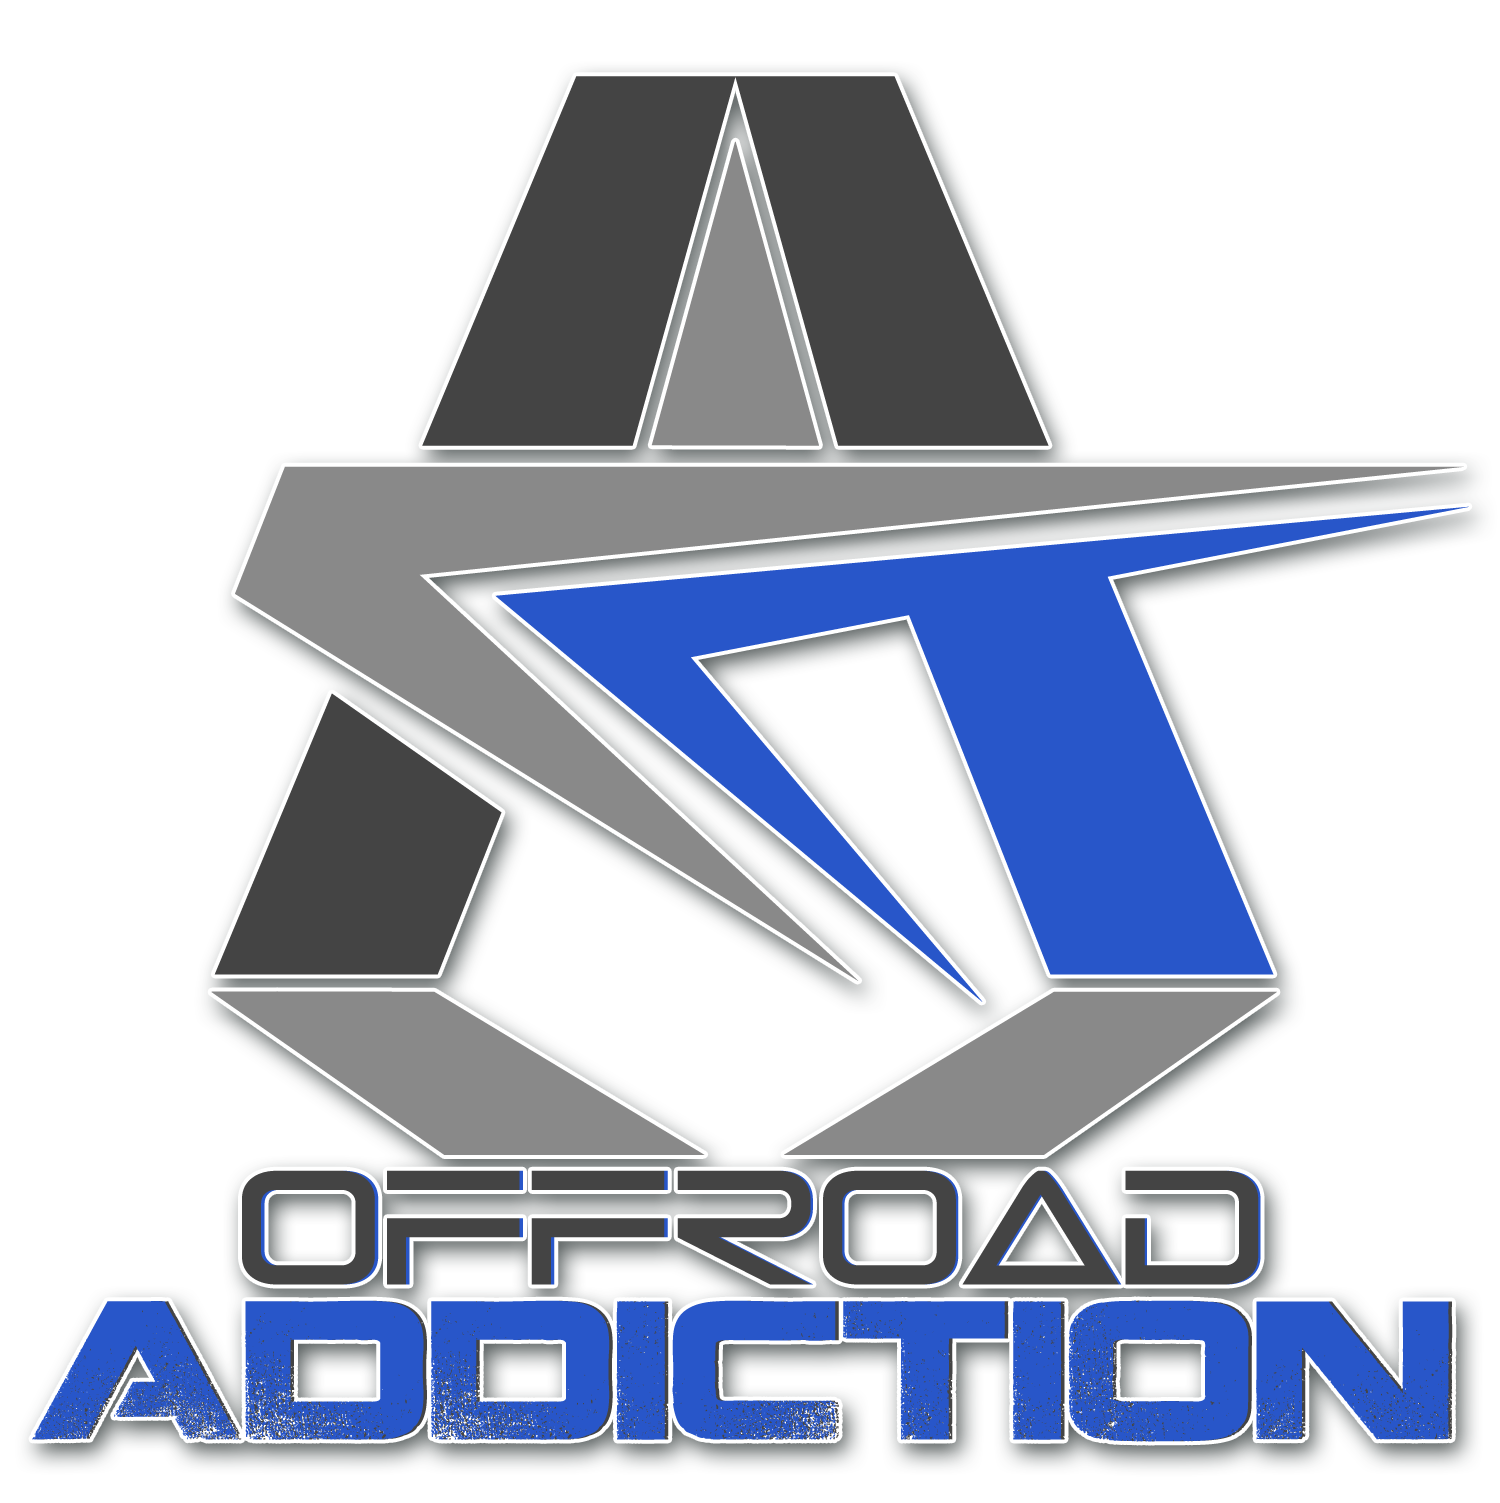 Offroad Addiction Inc